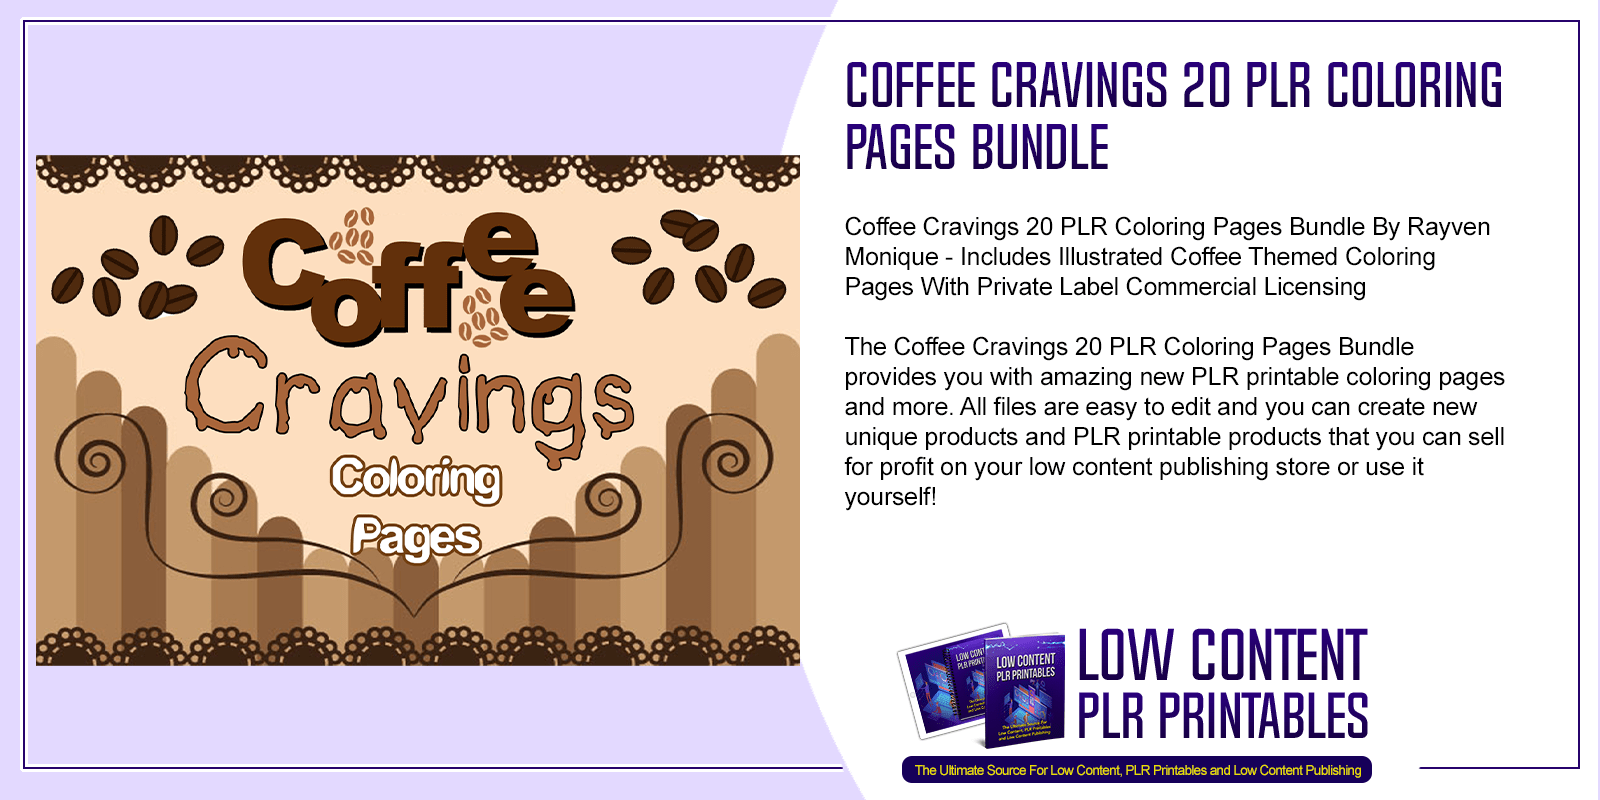 Coffee Cravings 20 PLR Coloring Pages Bundle